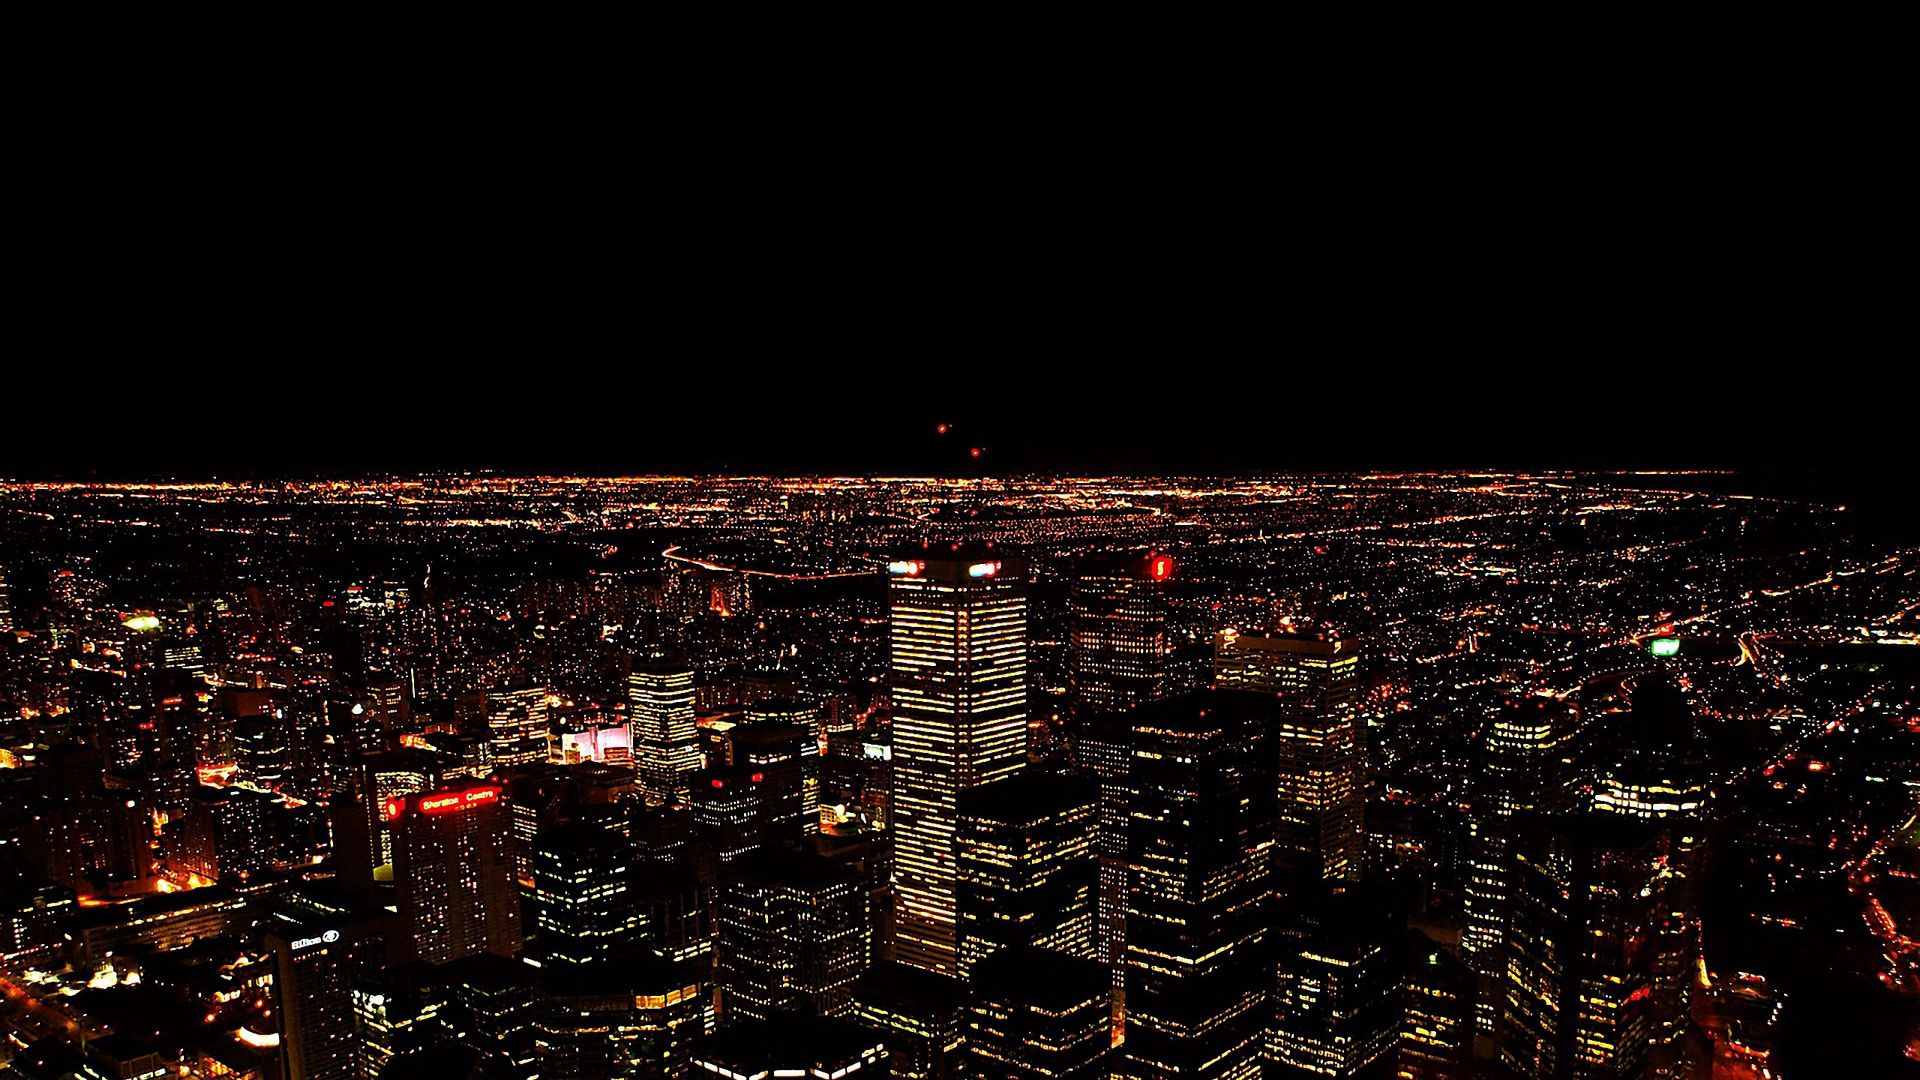 Download Wallpaper 19x1080 City Night Light Top View Full Hd Hdtv Fhd 1080p Hd Background